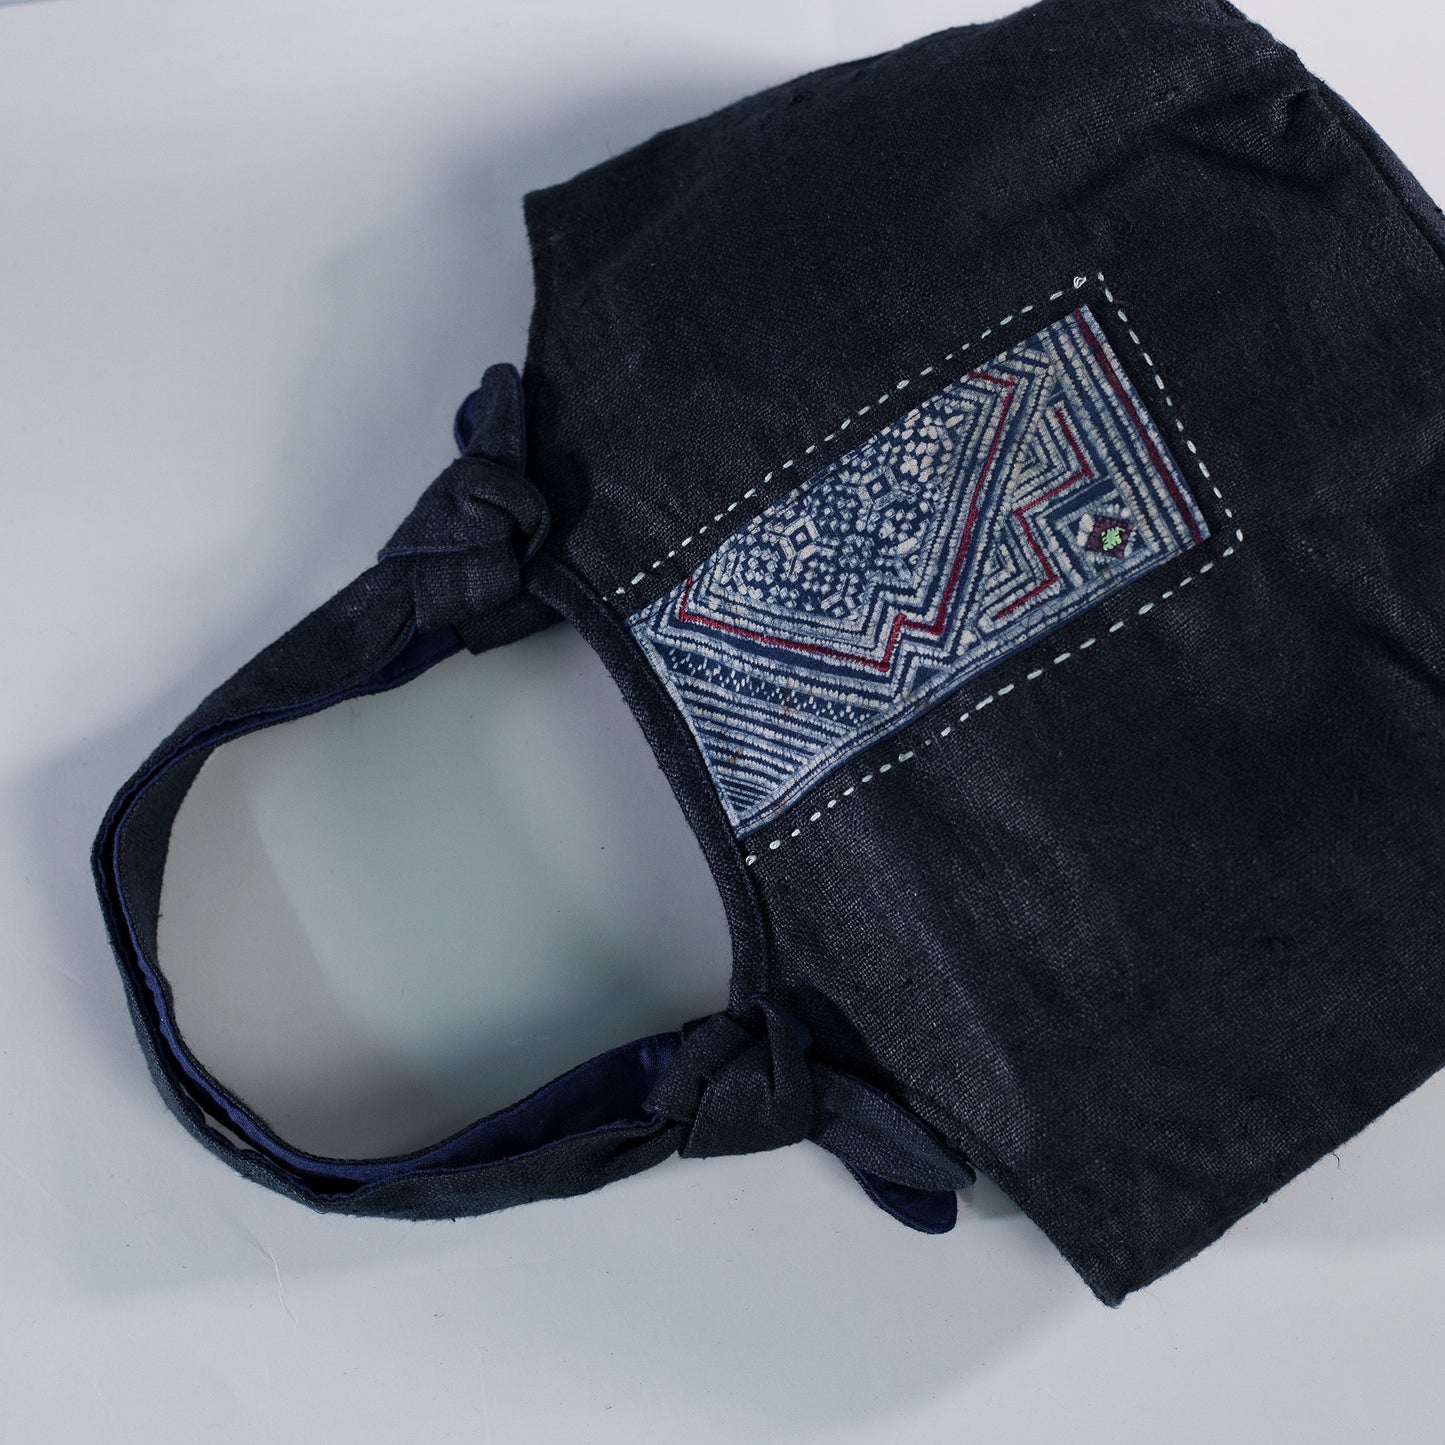 Bunny ear handbag, natural hemp in BLACK with vintage patch